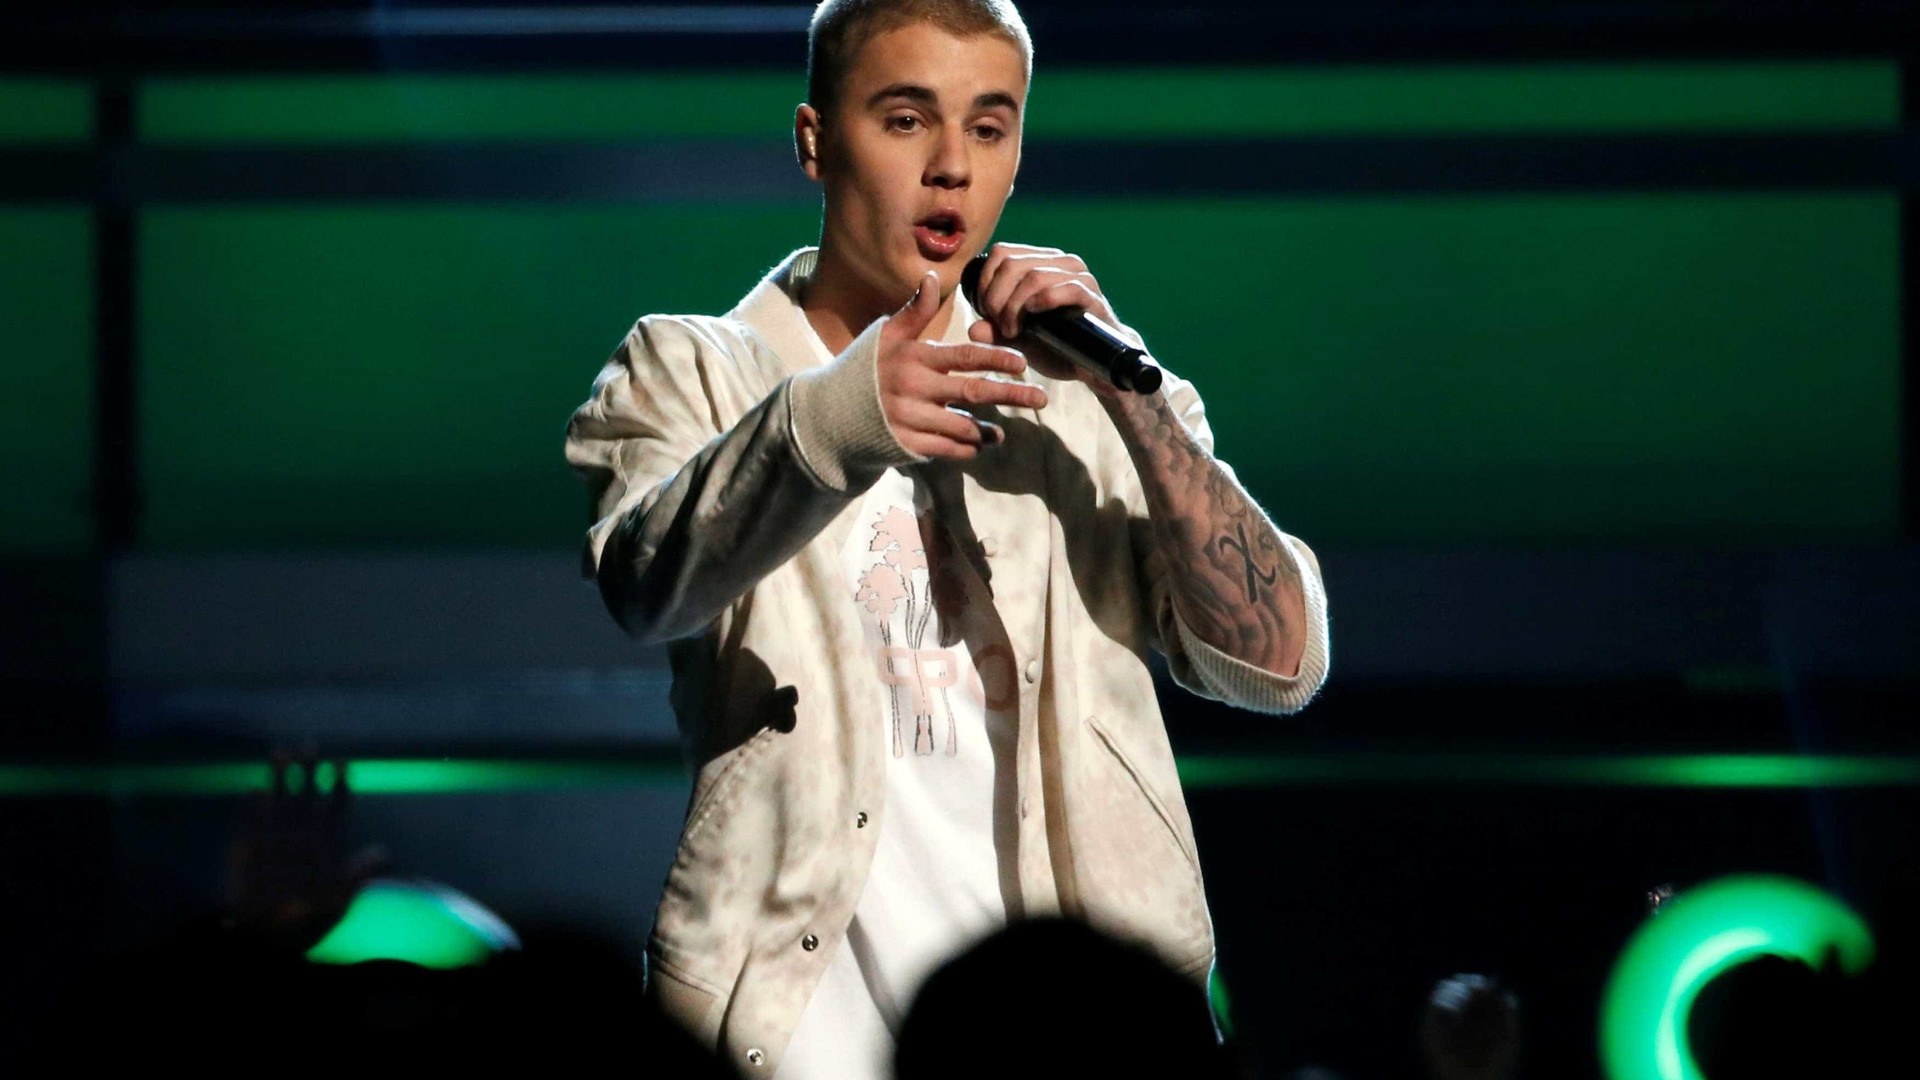 Coreógrafa detona Justin Bieber: 'Pare de degradar mulheres'